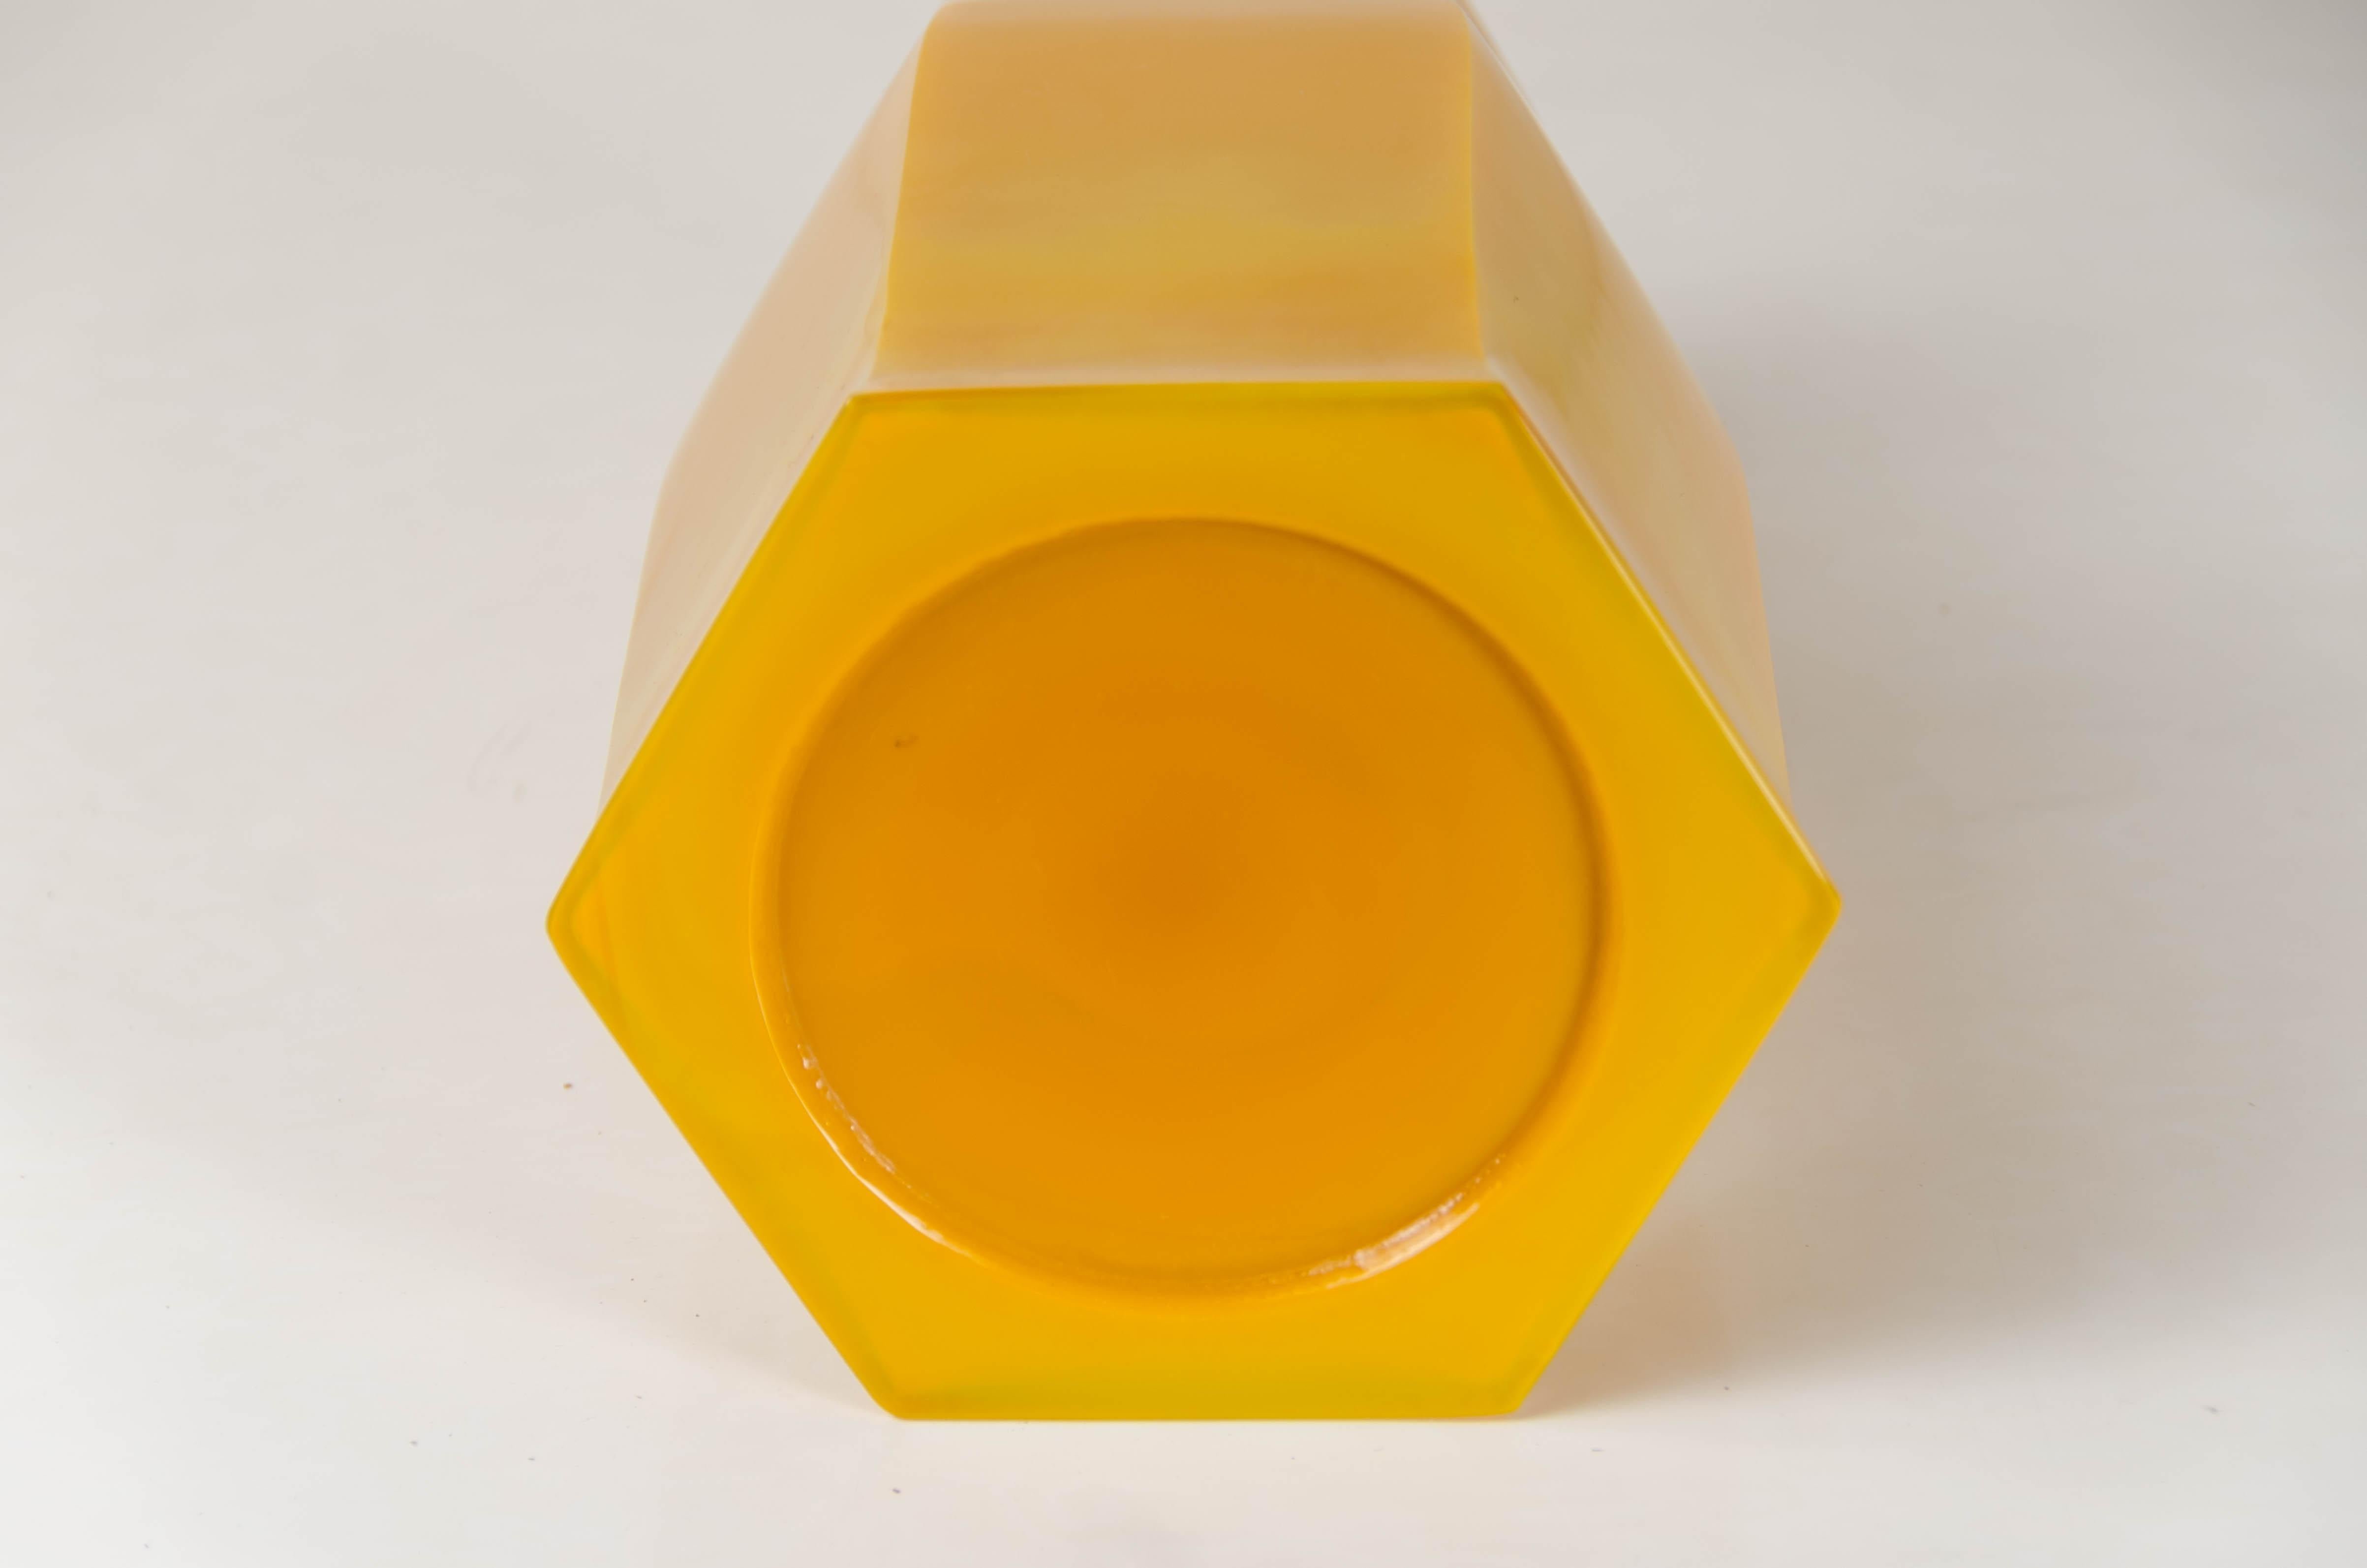 Hoof Vase, Yellow Peking Glass by Robert Kuo, Hand Blown Glass, Limited Edition 1